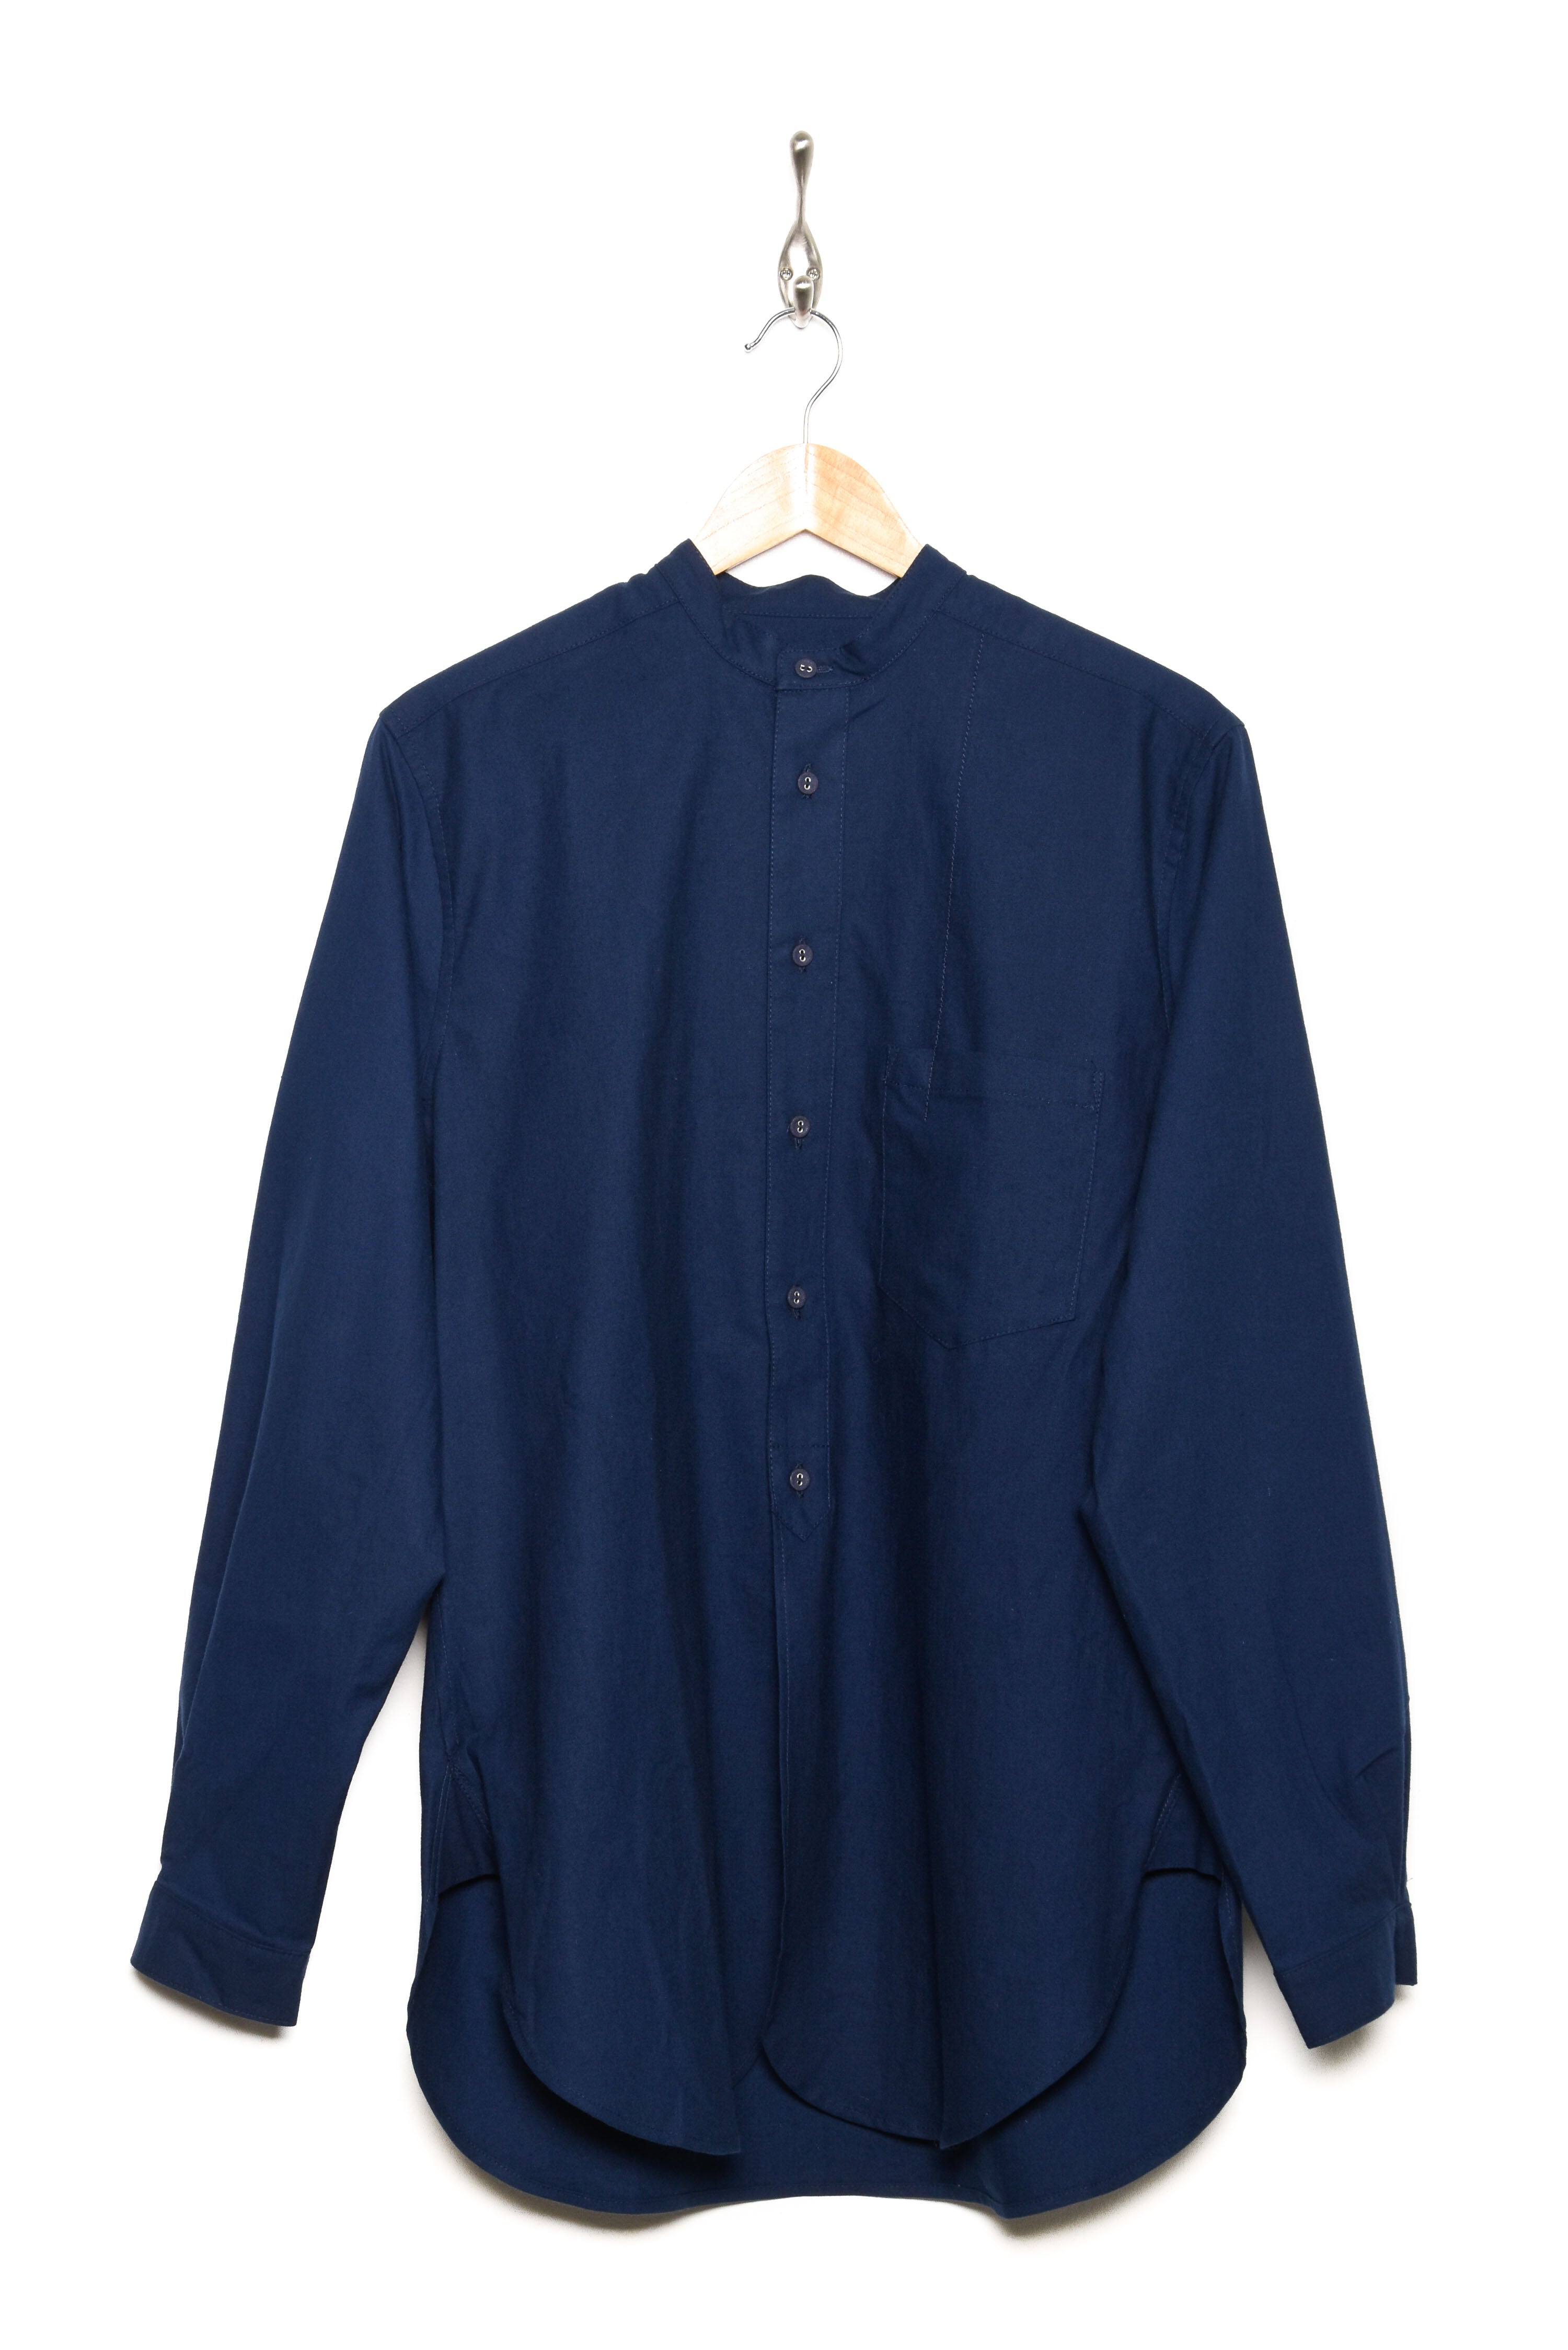 Frank Leder Collarless Shirt baltic blue dyed